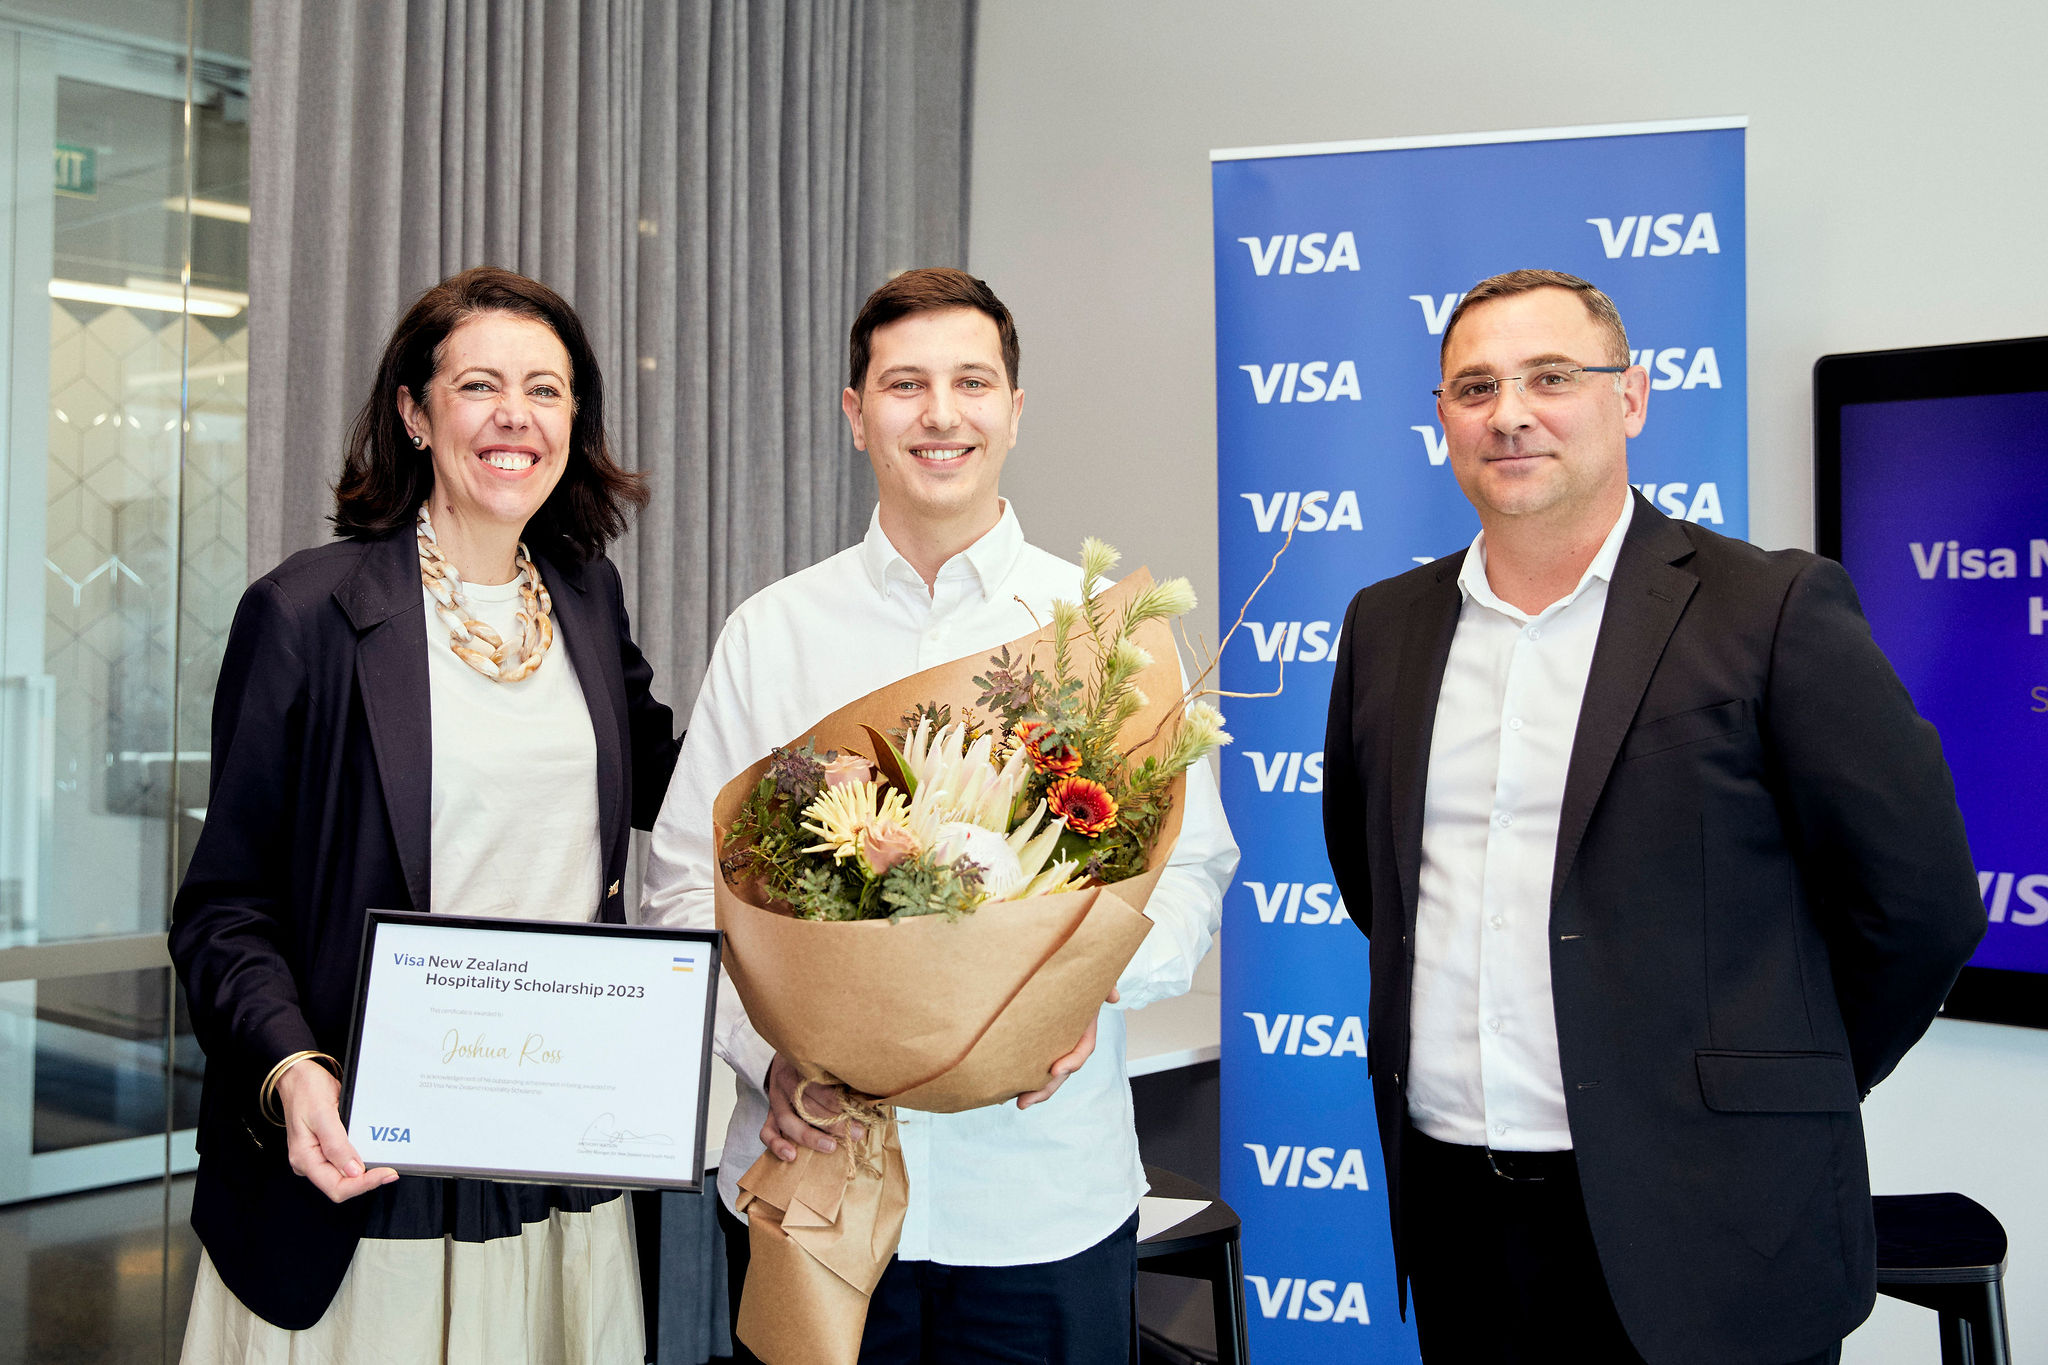 2023 Visa NZ Hospitality Scholarship Winner Joshua Ross with Sarah Meikle and Anthony Watson